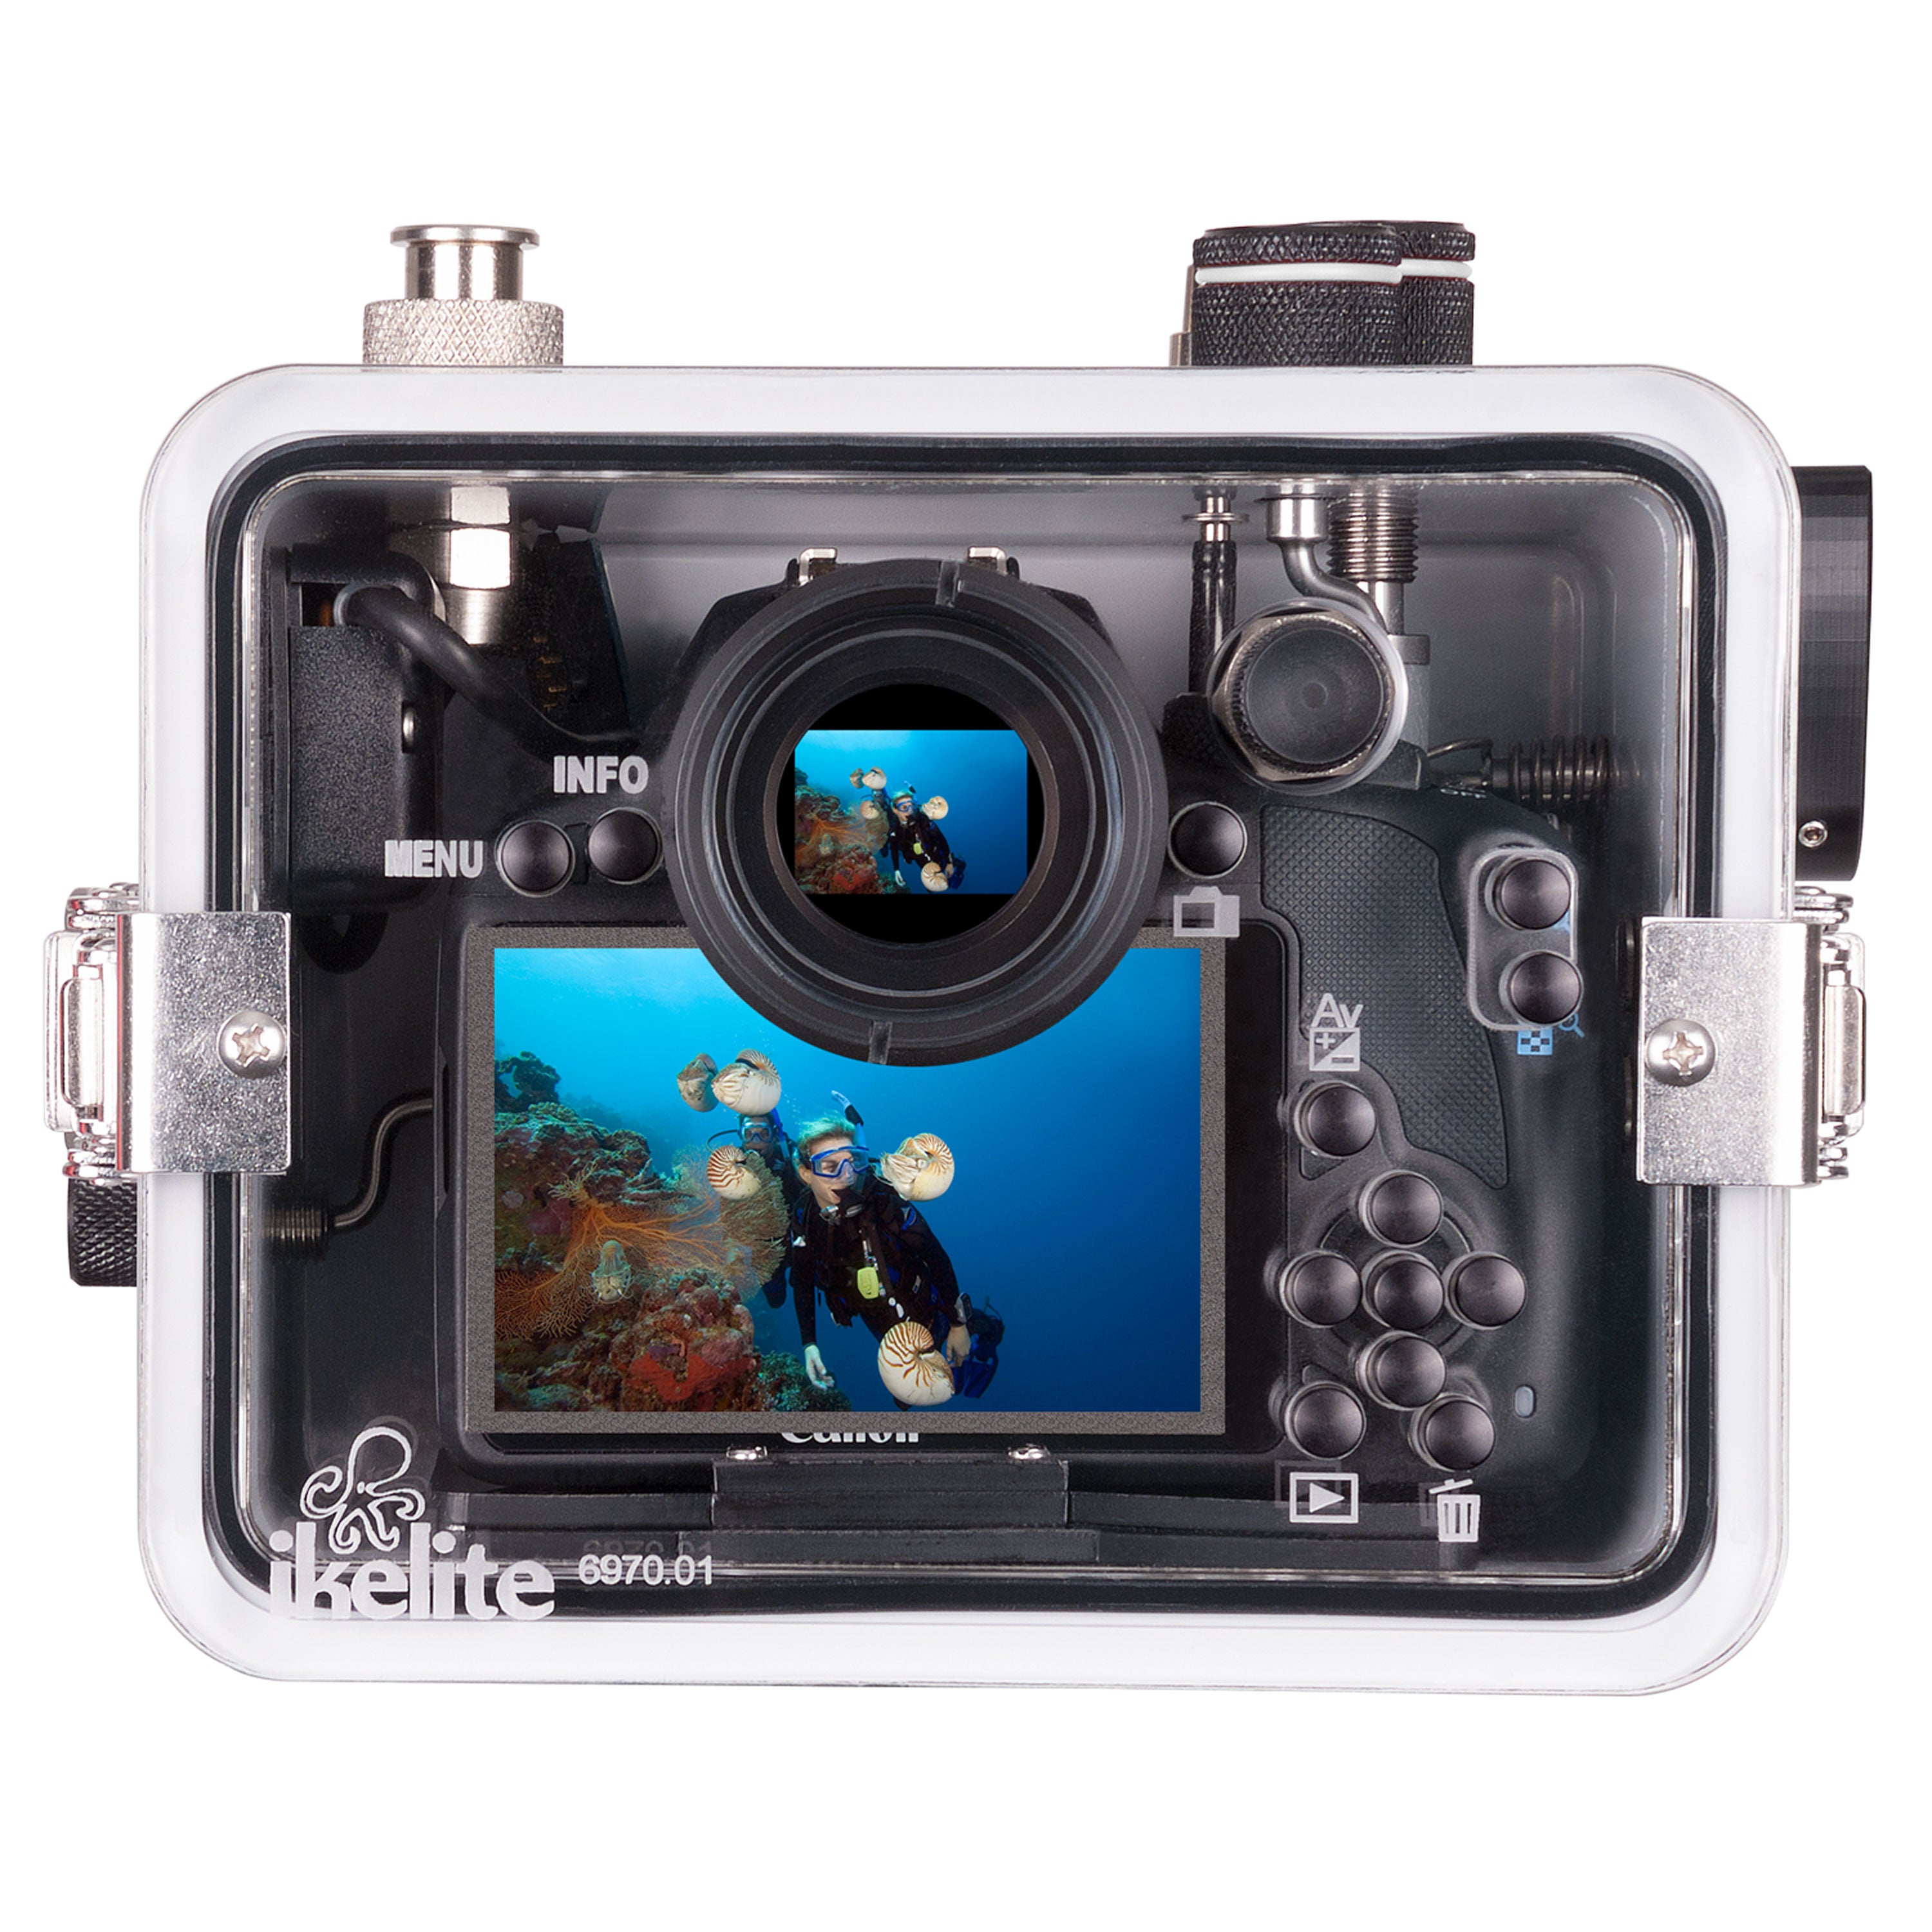 200DLM/C Underwater Housing and Canon Rebel SL1 Camera Kit